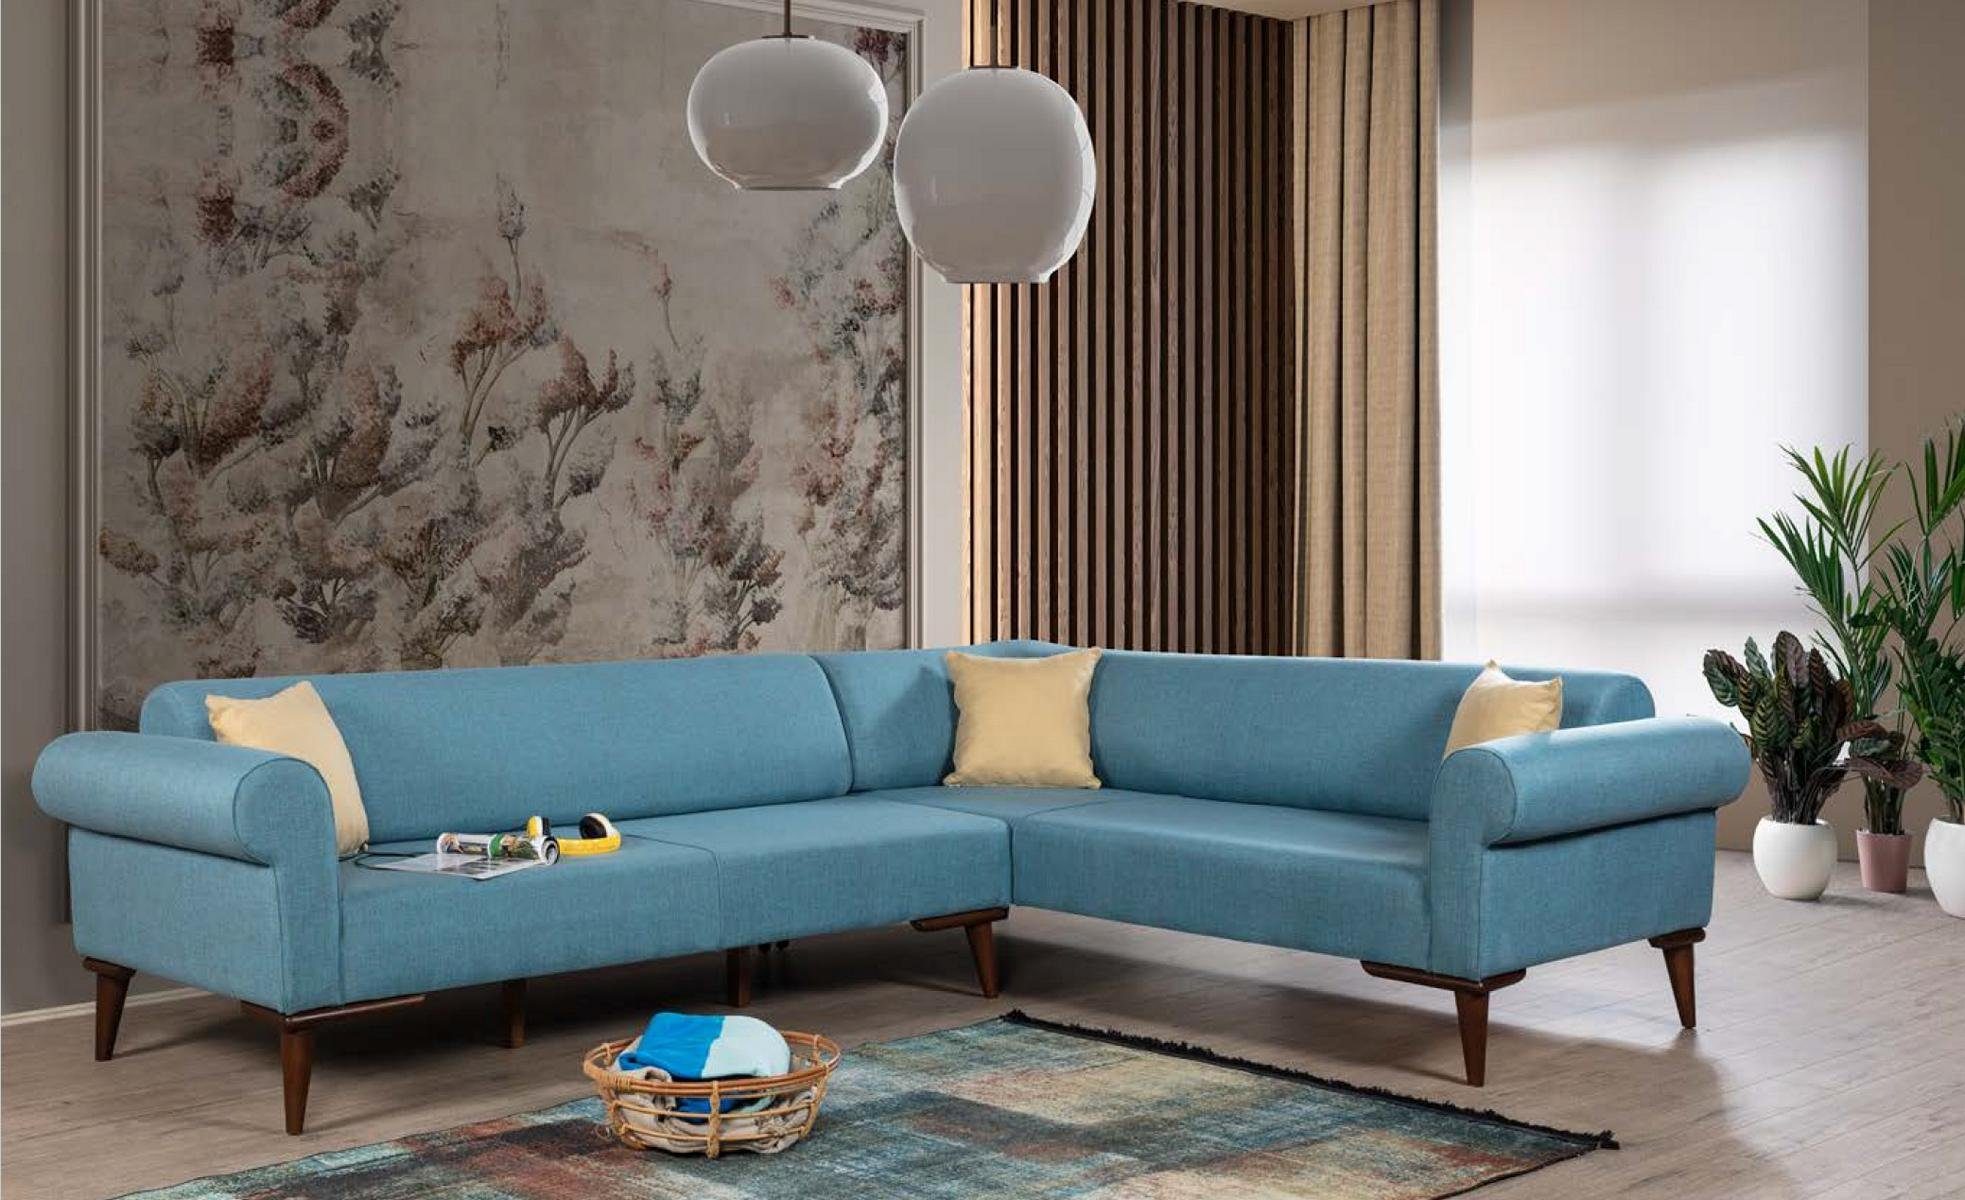 JVmoebel Ecksofa Blaues Ecksofa Holz Couch Wohnzimmer Sofa L-Form Sofa Neu, Made in Europe